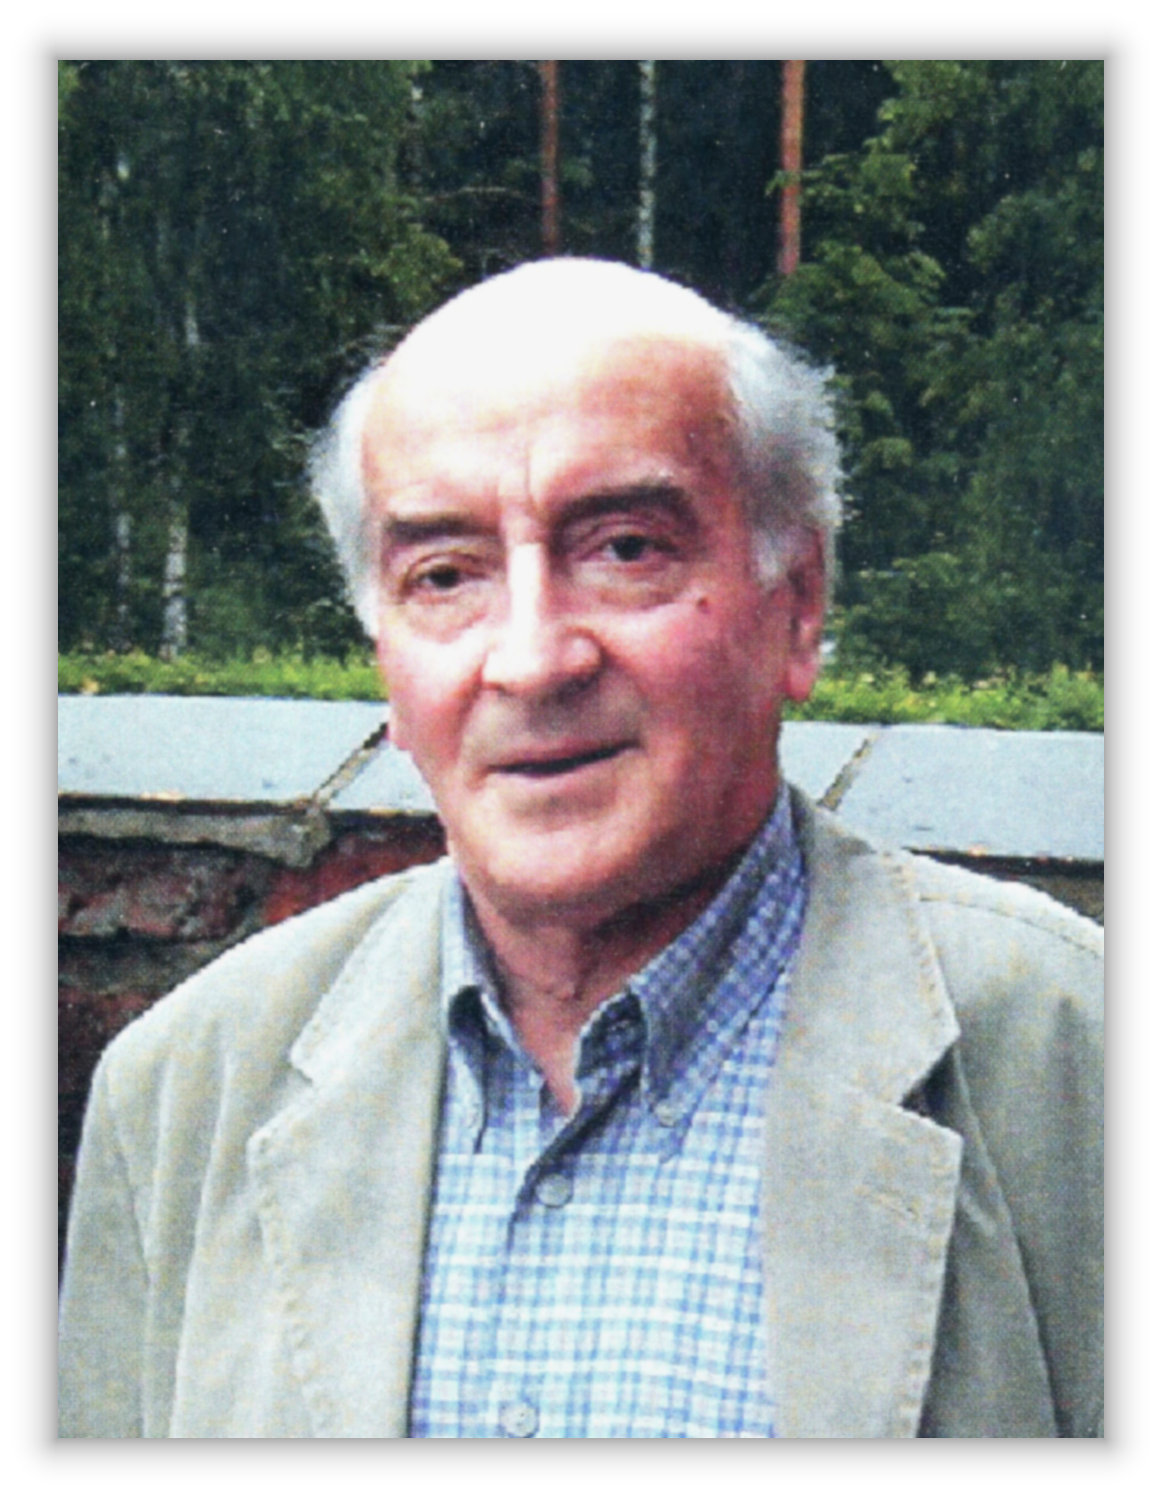 Gerasim M. Eliashberg (1930-2021)